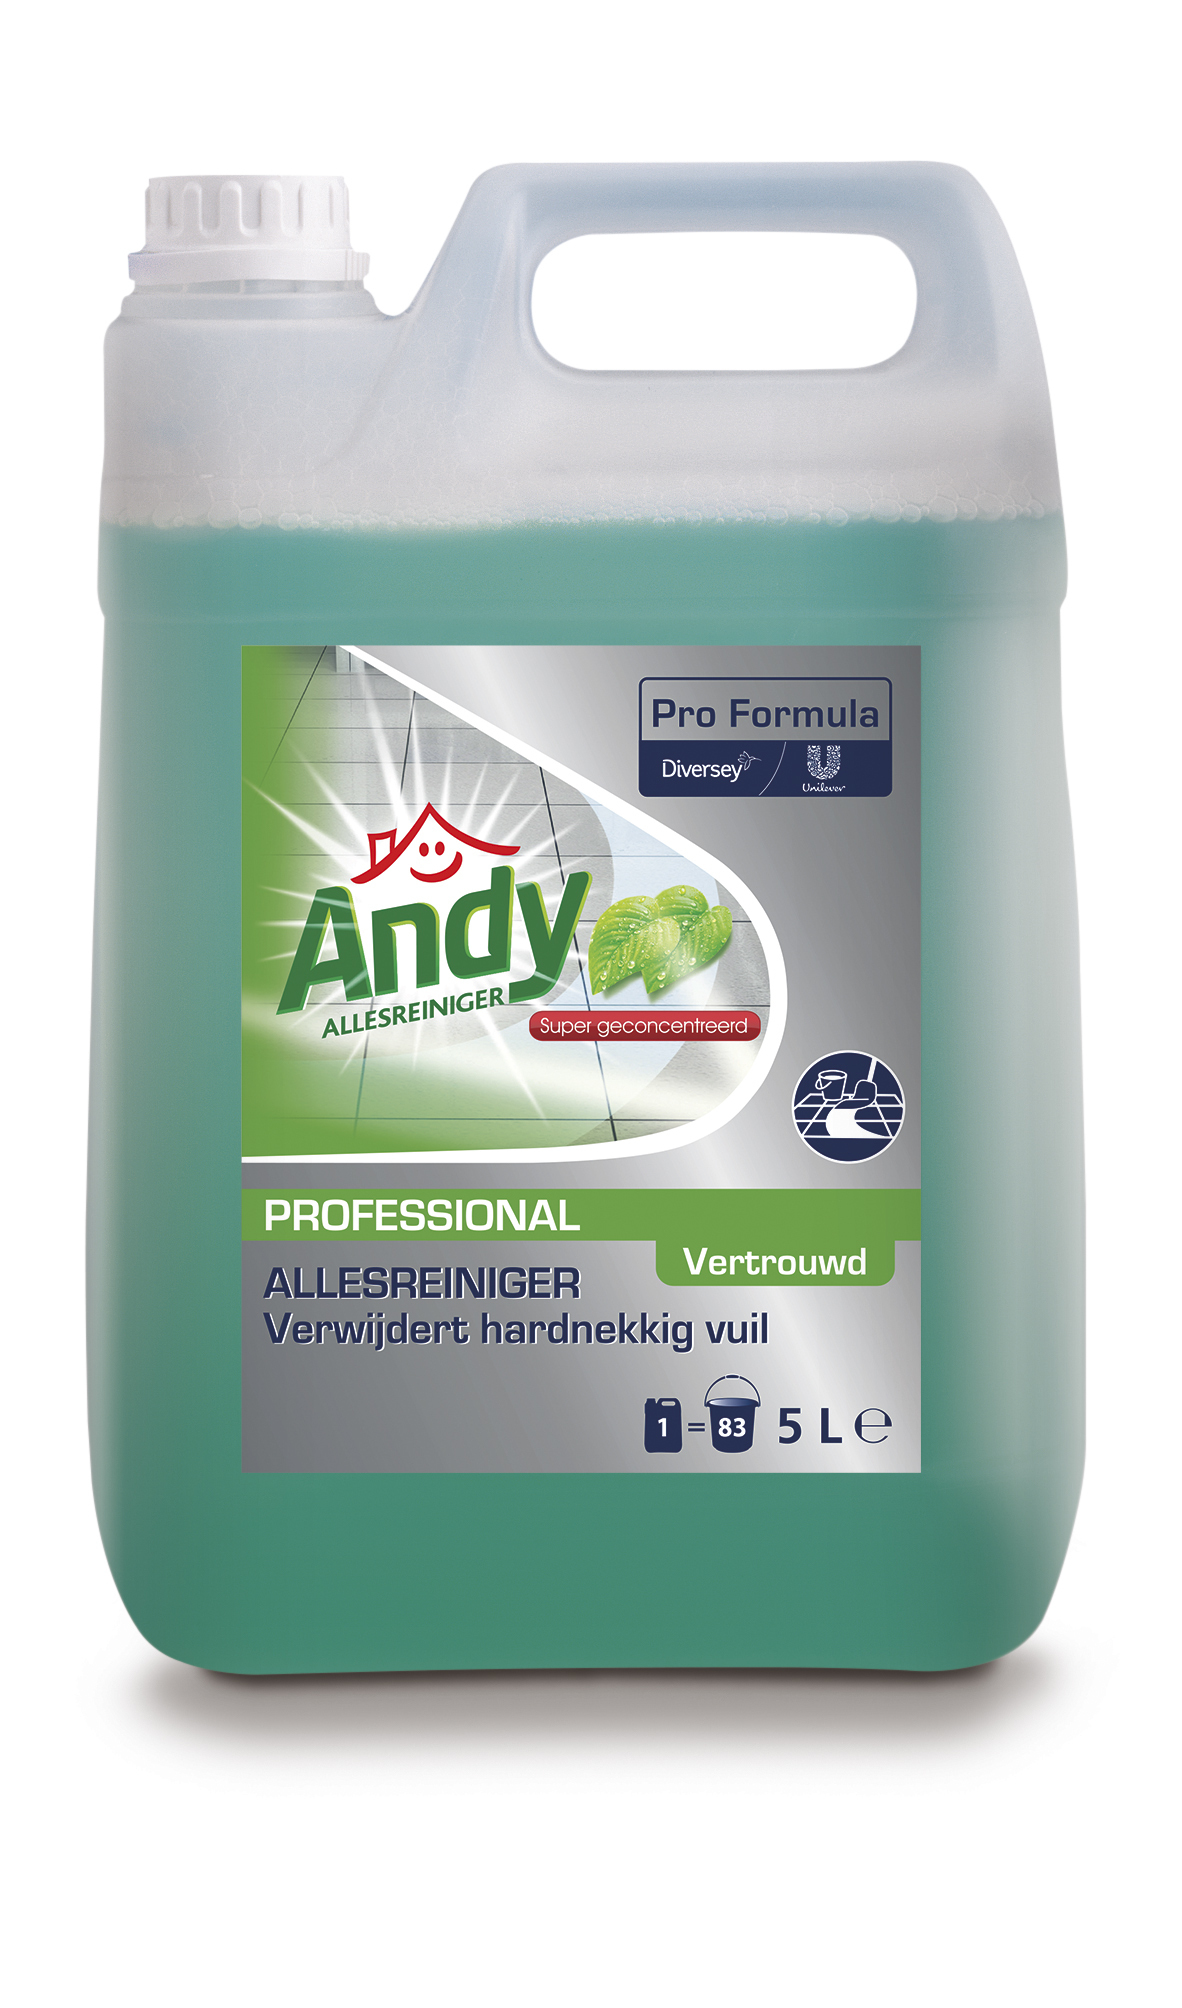 Andy Pro Formula Allesreiniger Vertrouwd 5 L